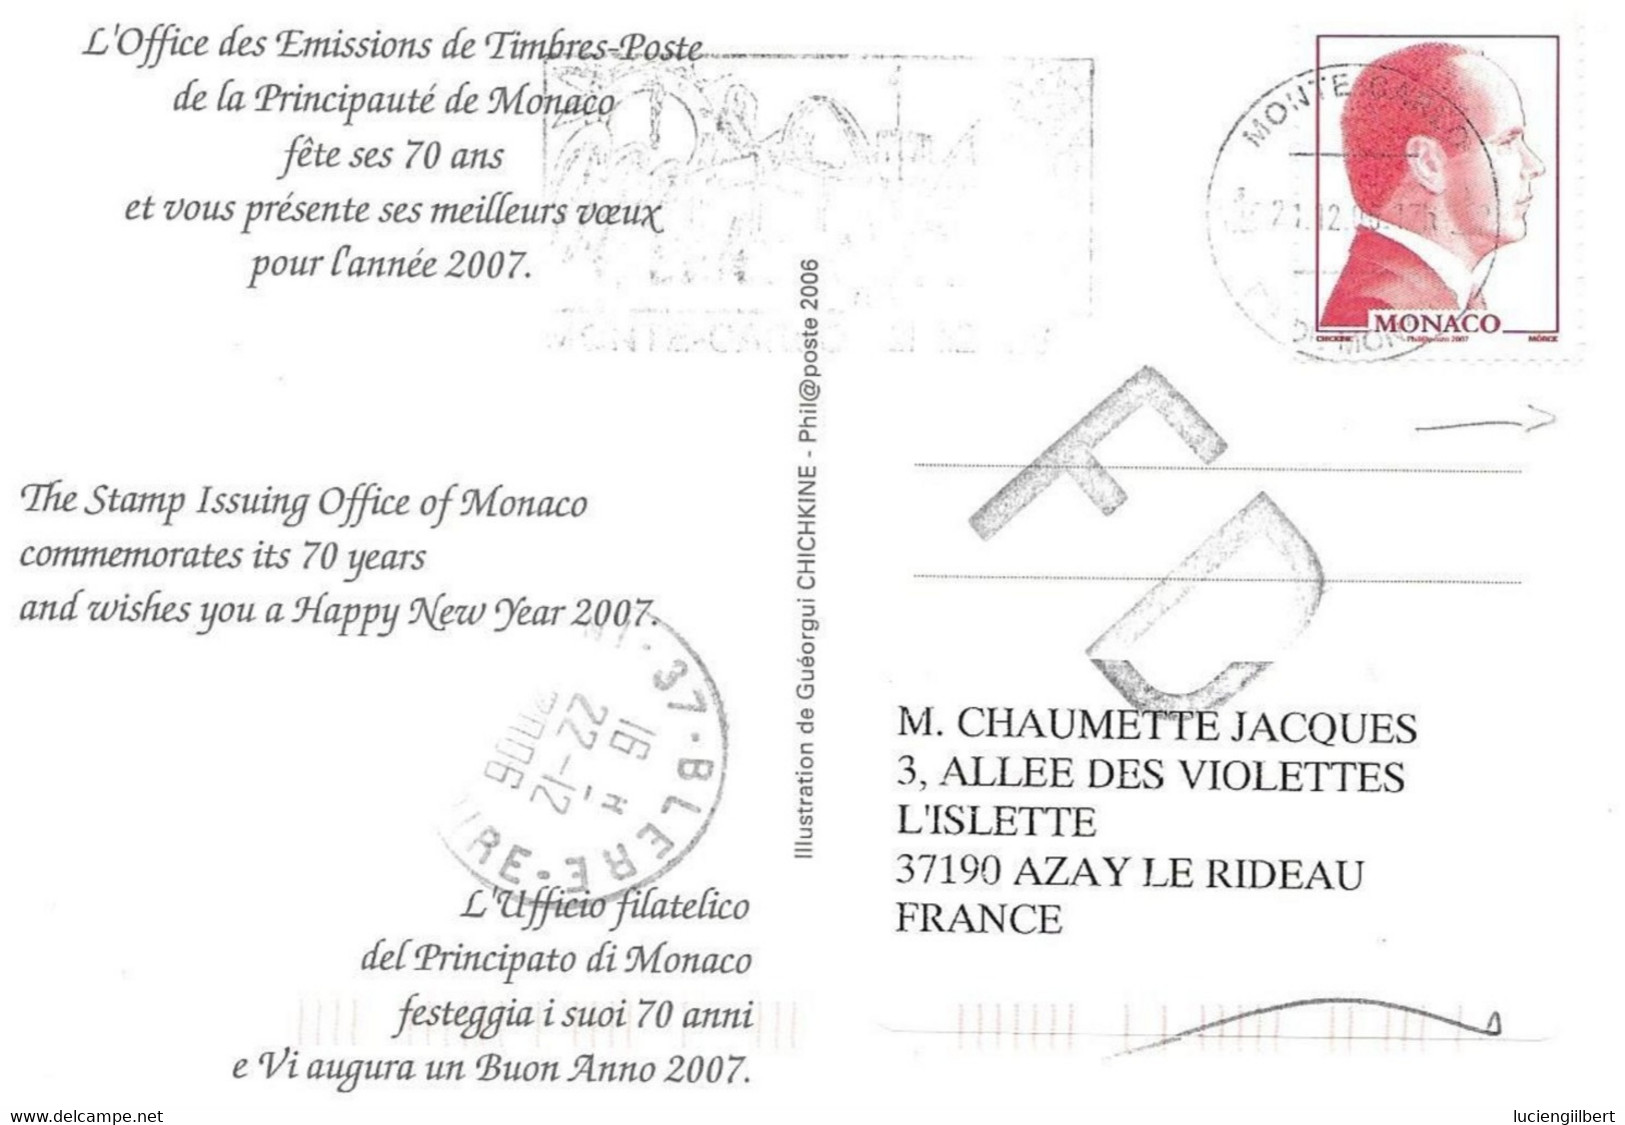 MONACO  -   MONTE CARLO  -   TIMBRE N° 2562 -   TARIF DU 1 10 06 AU 28 2 08 -  -  2006 - GRAVURE S.A.S. PRINCE ALBERT II - Lettres & Documents